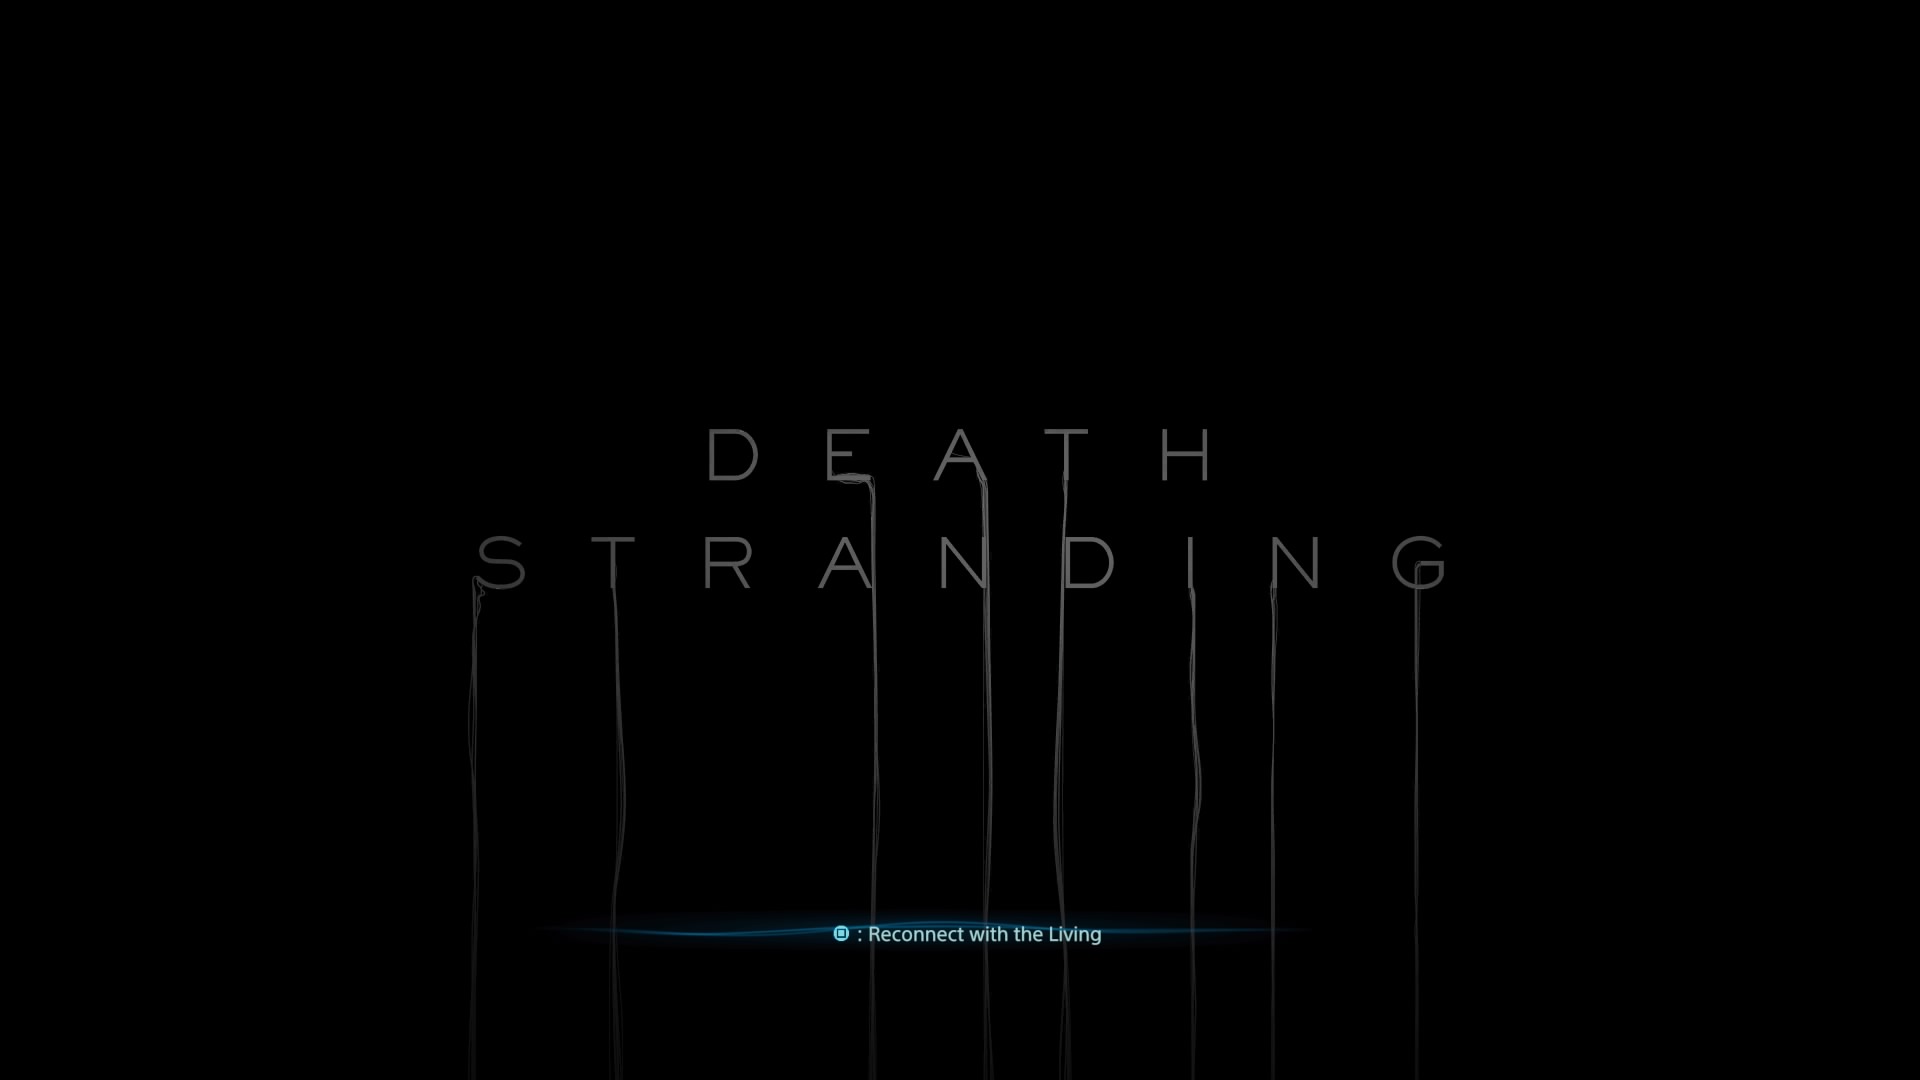 Troy Baker as Higgs. Hollywood in Games – People of Death Stranding